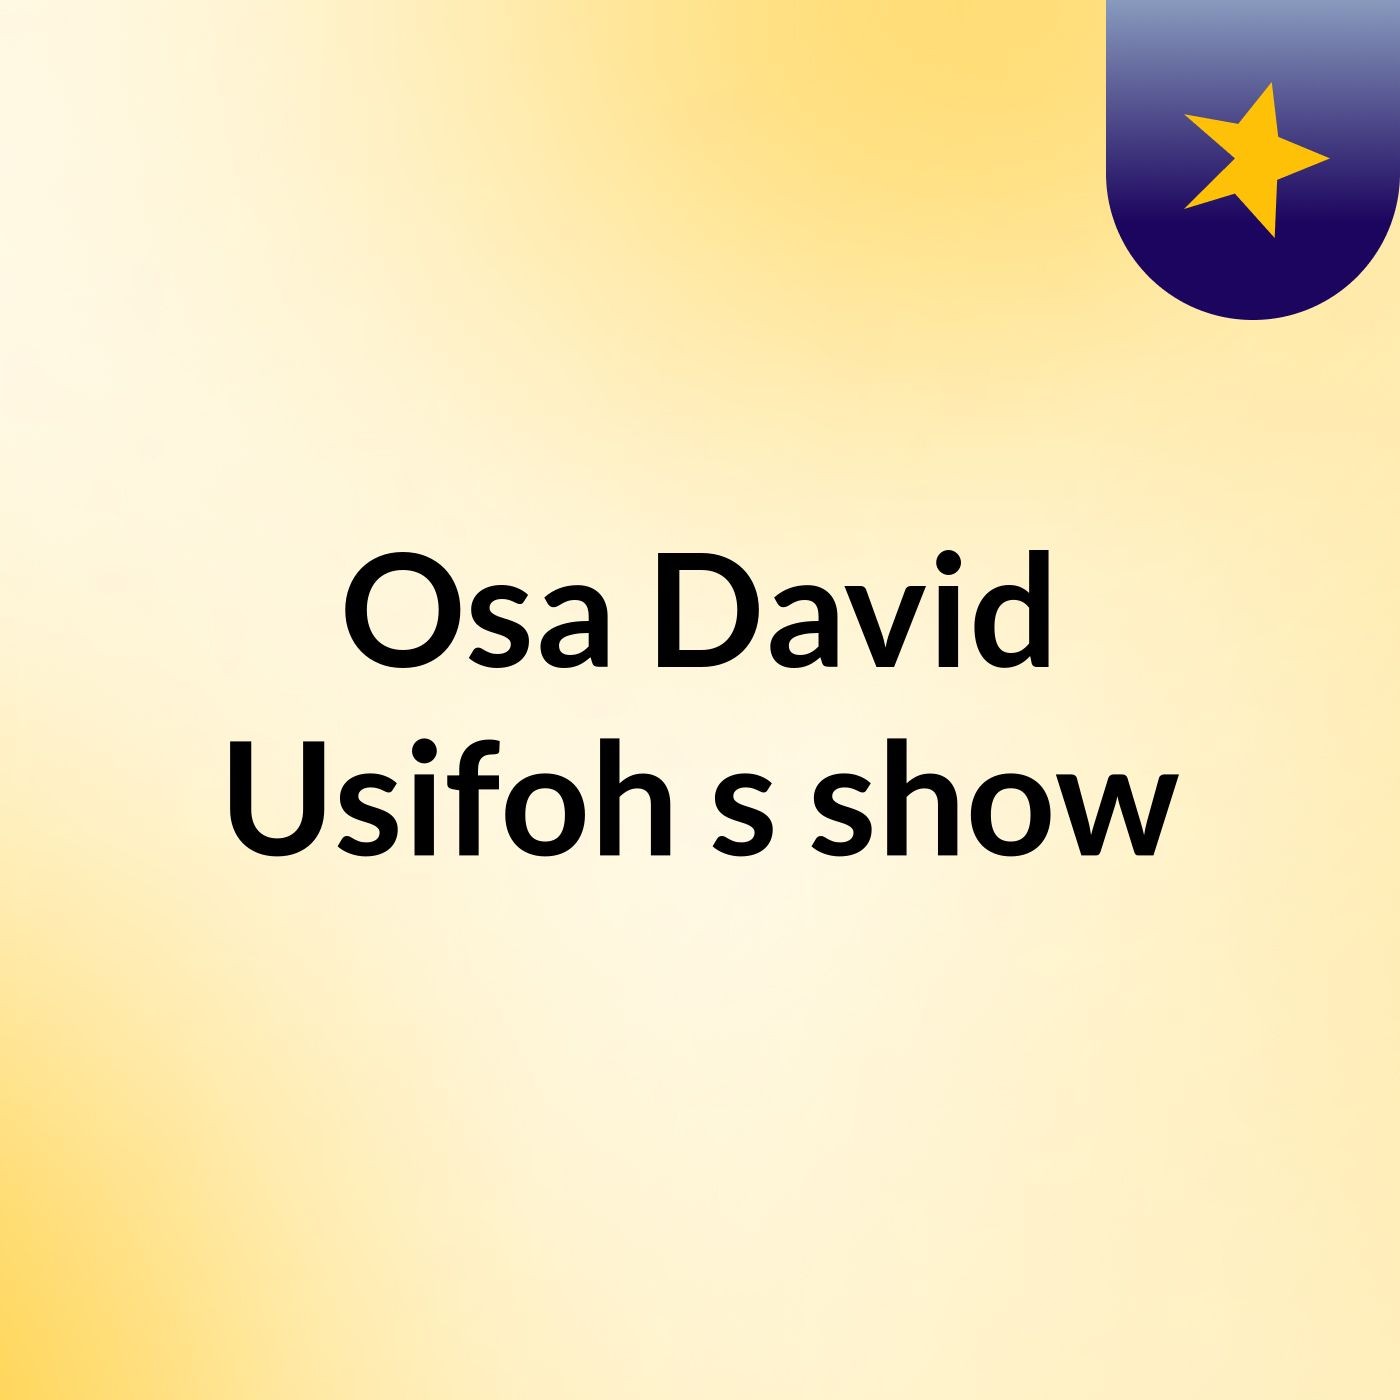 Osa David Usifoh's show